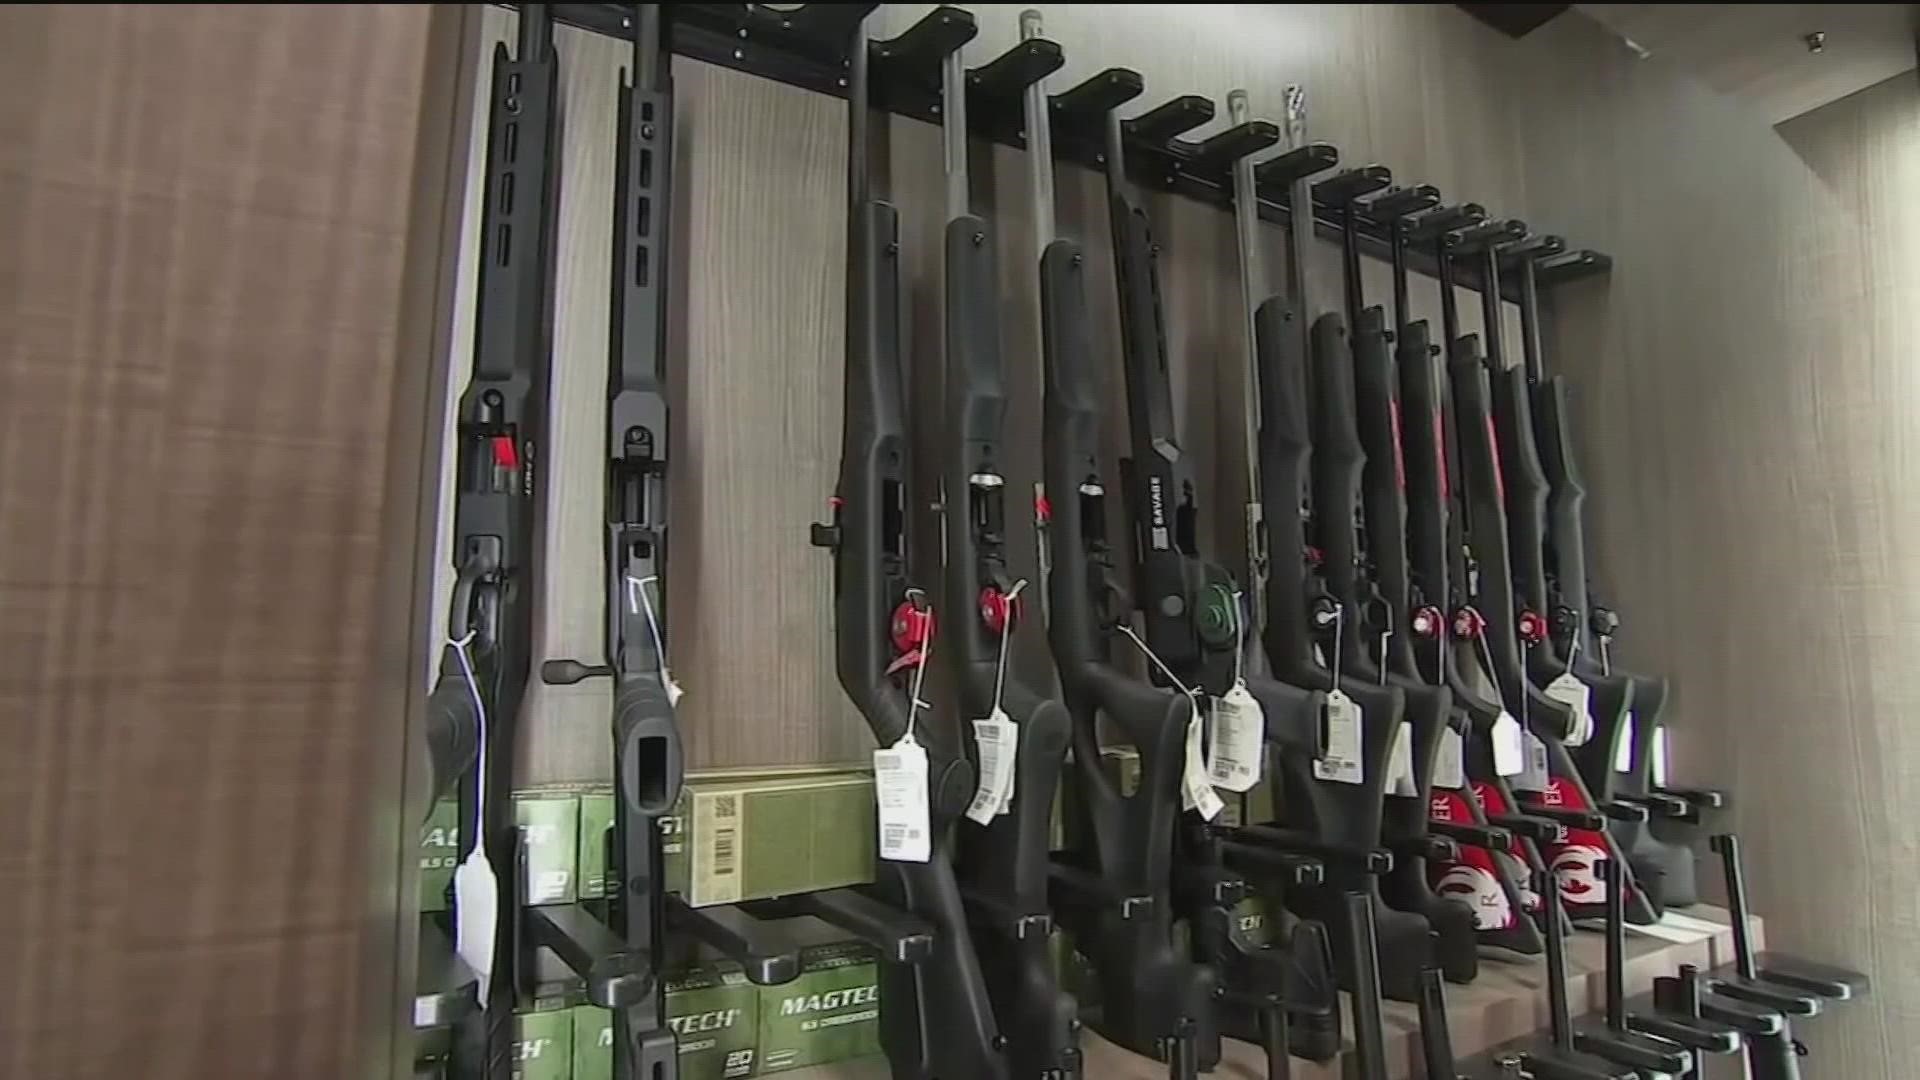 New legislation targets marketing guns to children in the state.